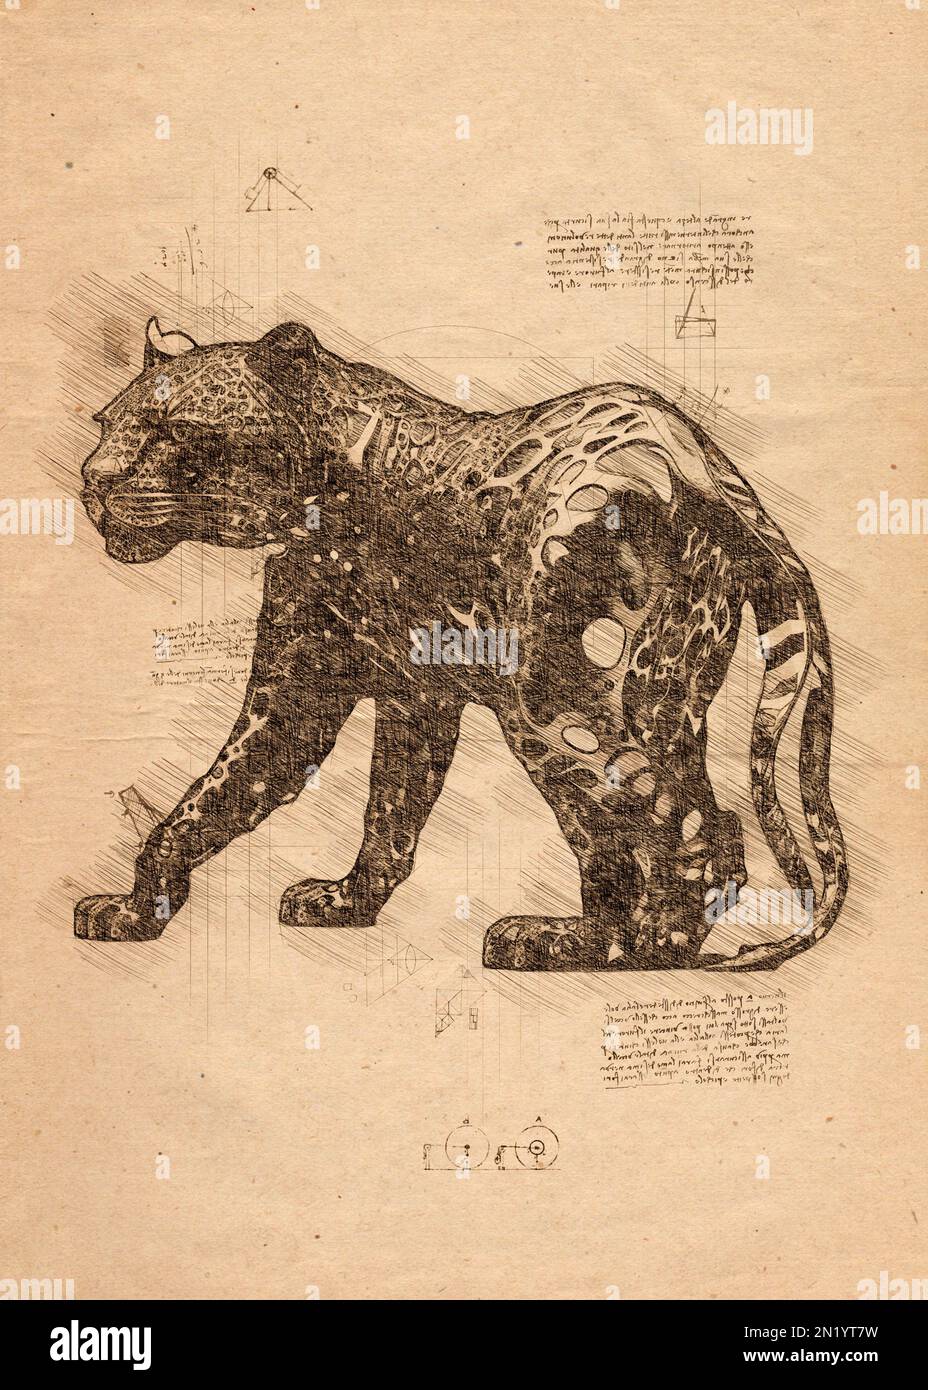 Digital sketch of a jaguar in old sketch style Stock Photo